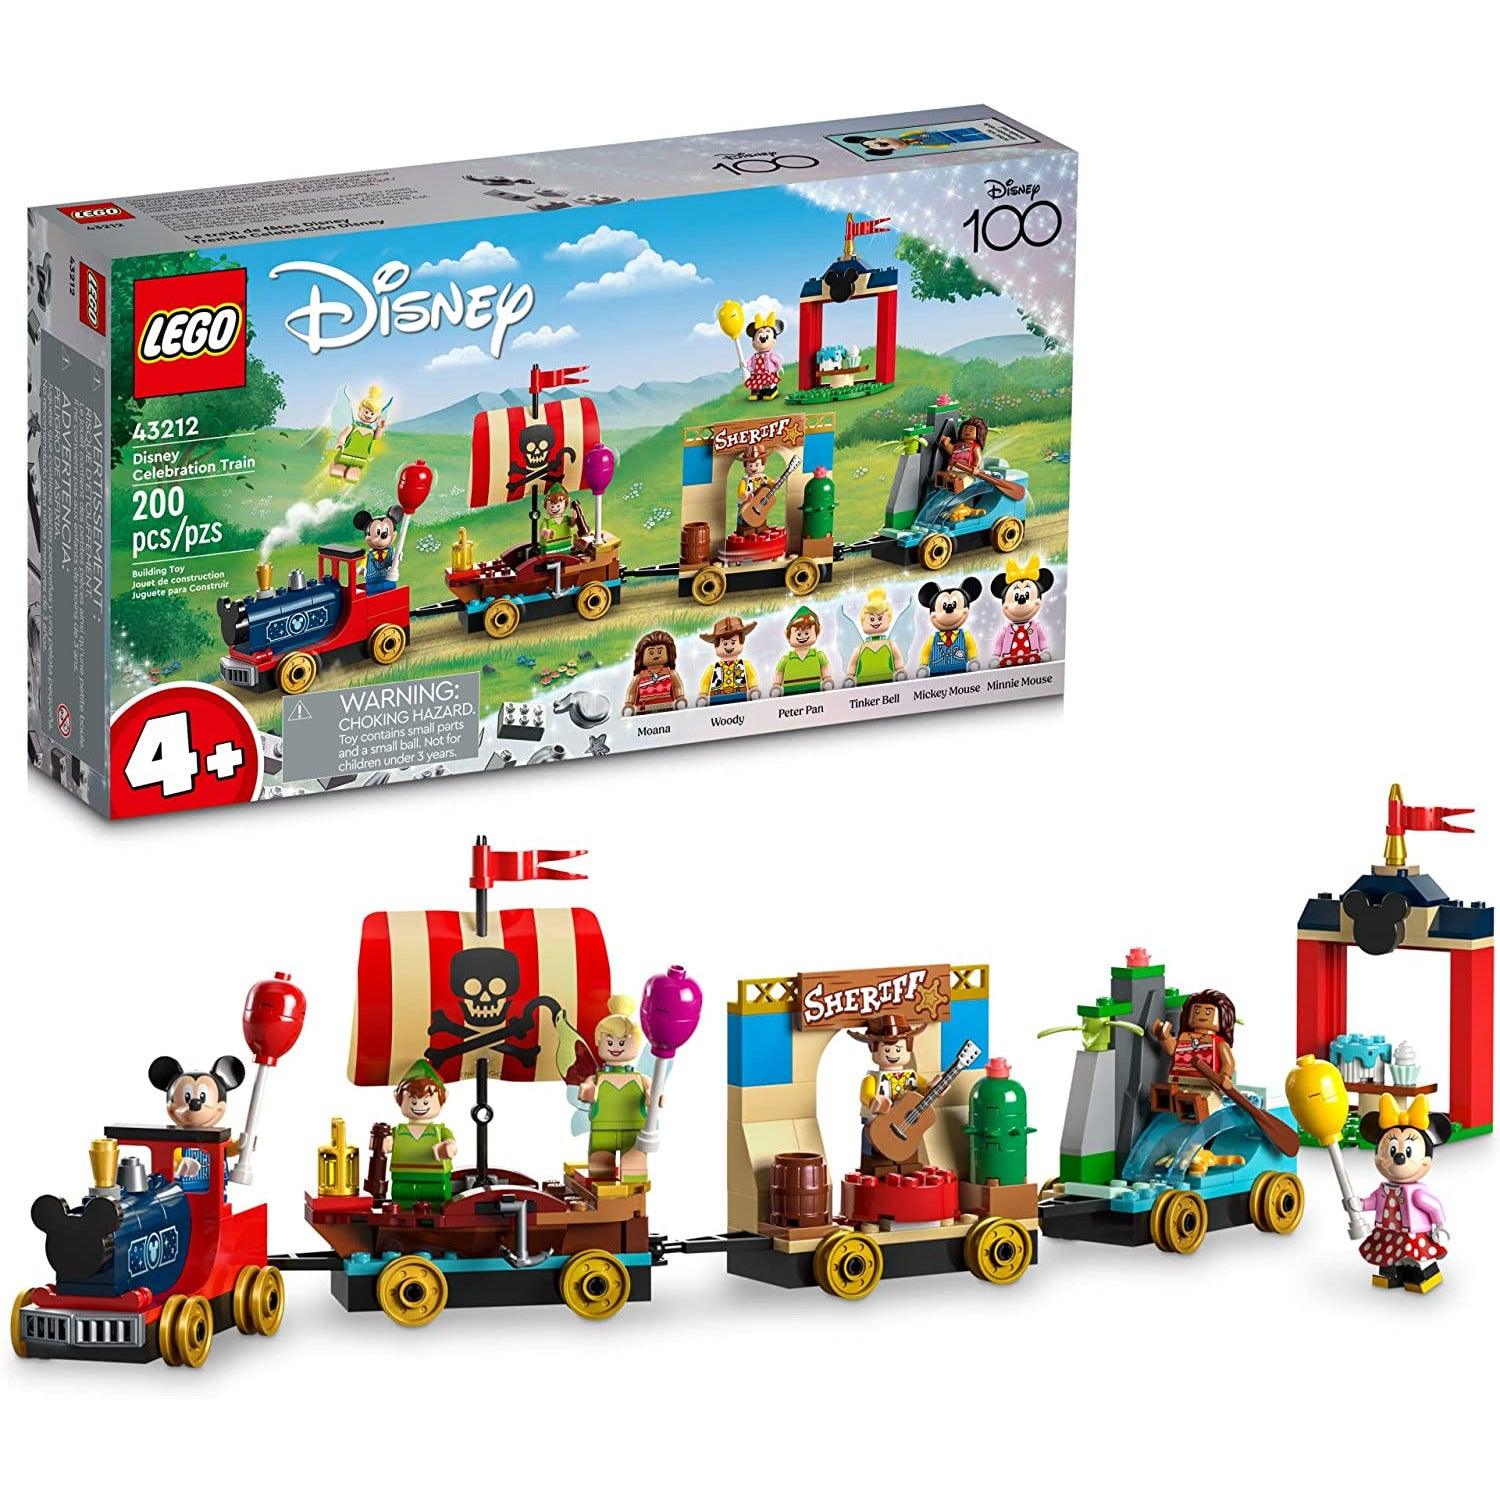 LEGO 43212 Disney 100 Celebration Train Building Toy (200 Pieces) - BumbleToys - +18, 5-7 Years, 6+ Years, Disney, Disney Princess, Girls, LEGO, OXE, Pre-Order